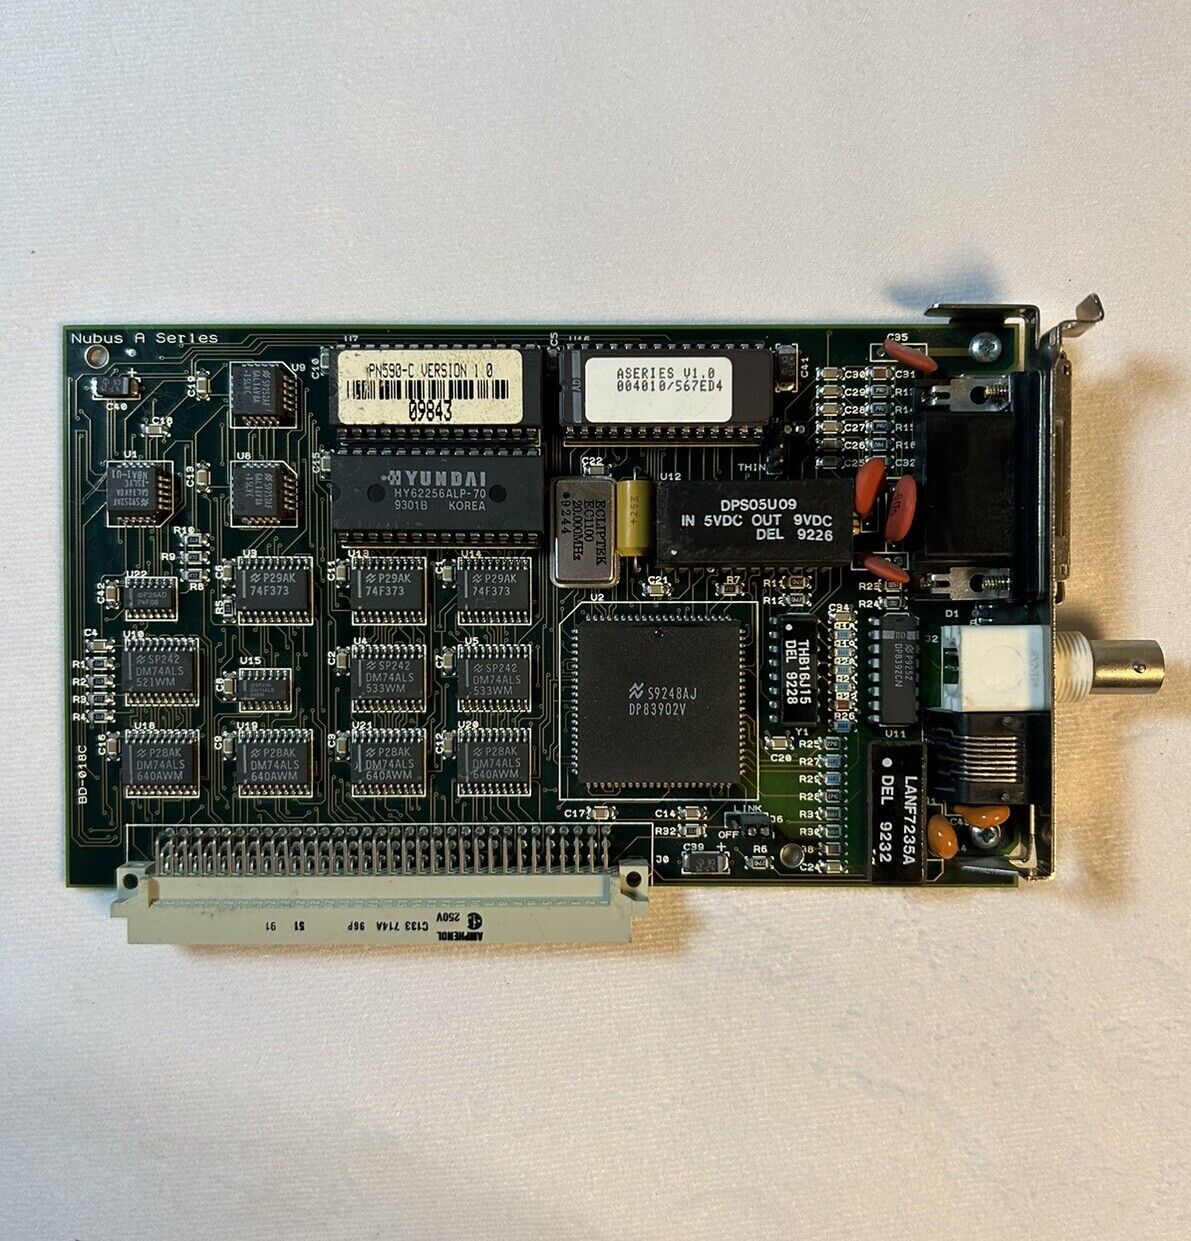 NUBUS A SERIES V1. 0 004010 / 567ED4 Vintage Circuit Board